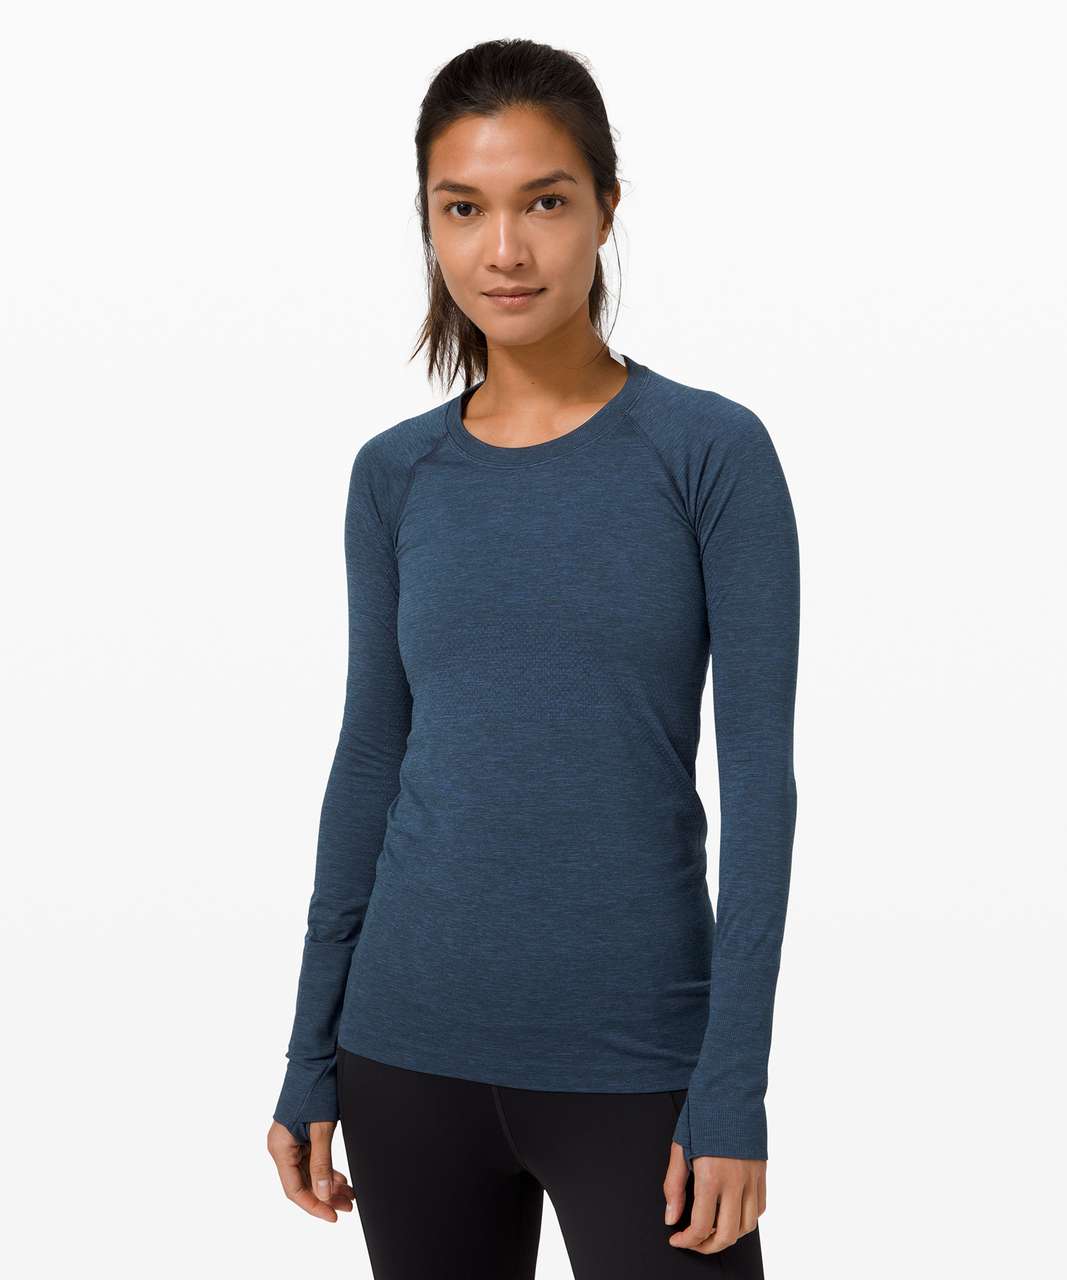 Lululemon Swiftly Tech Long Sleeve Shirt 2.0 - Mineral Blue / Soft